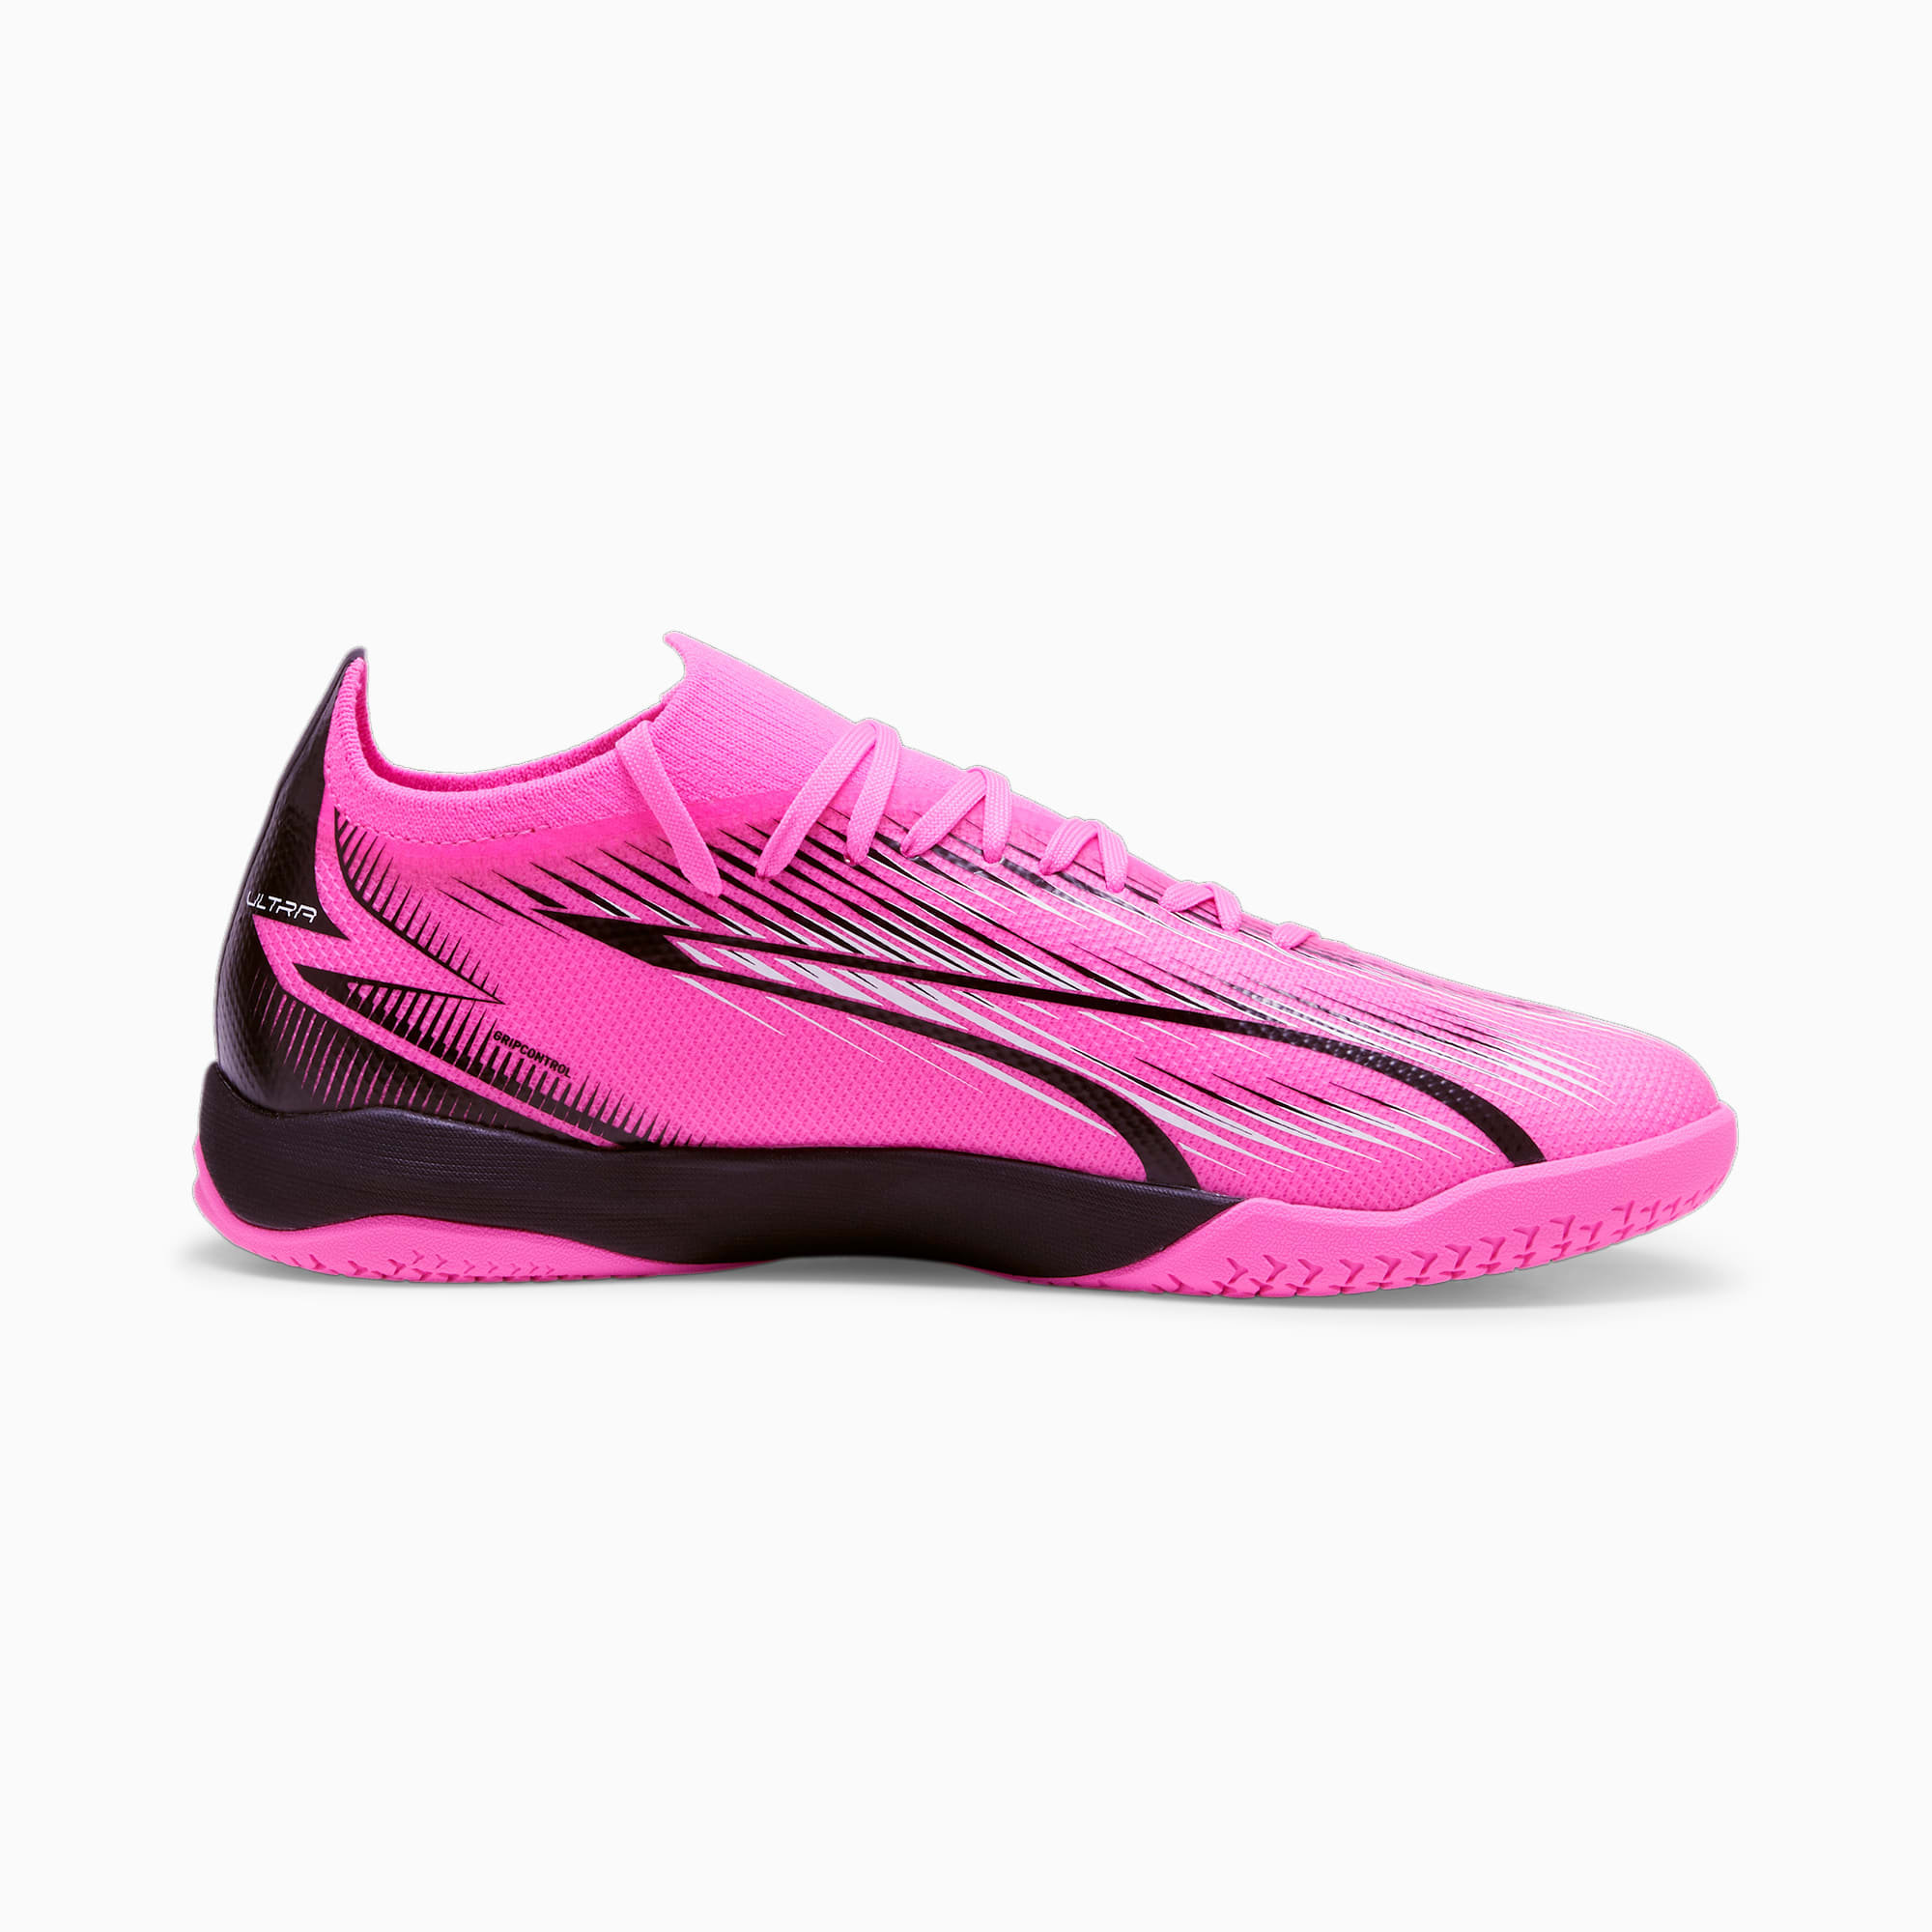 PUMA Chaussures De Futsal ULTRA MATCH Pour Homme, Rose/Noir/Blanc